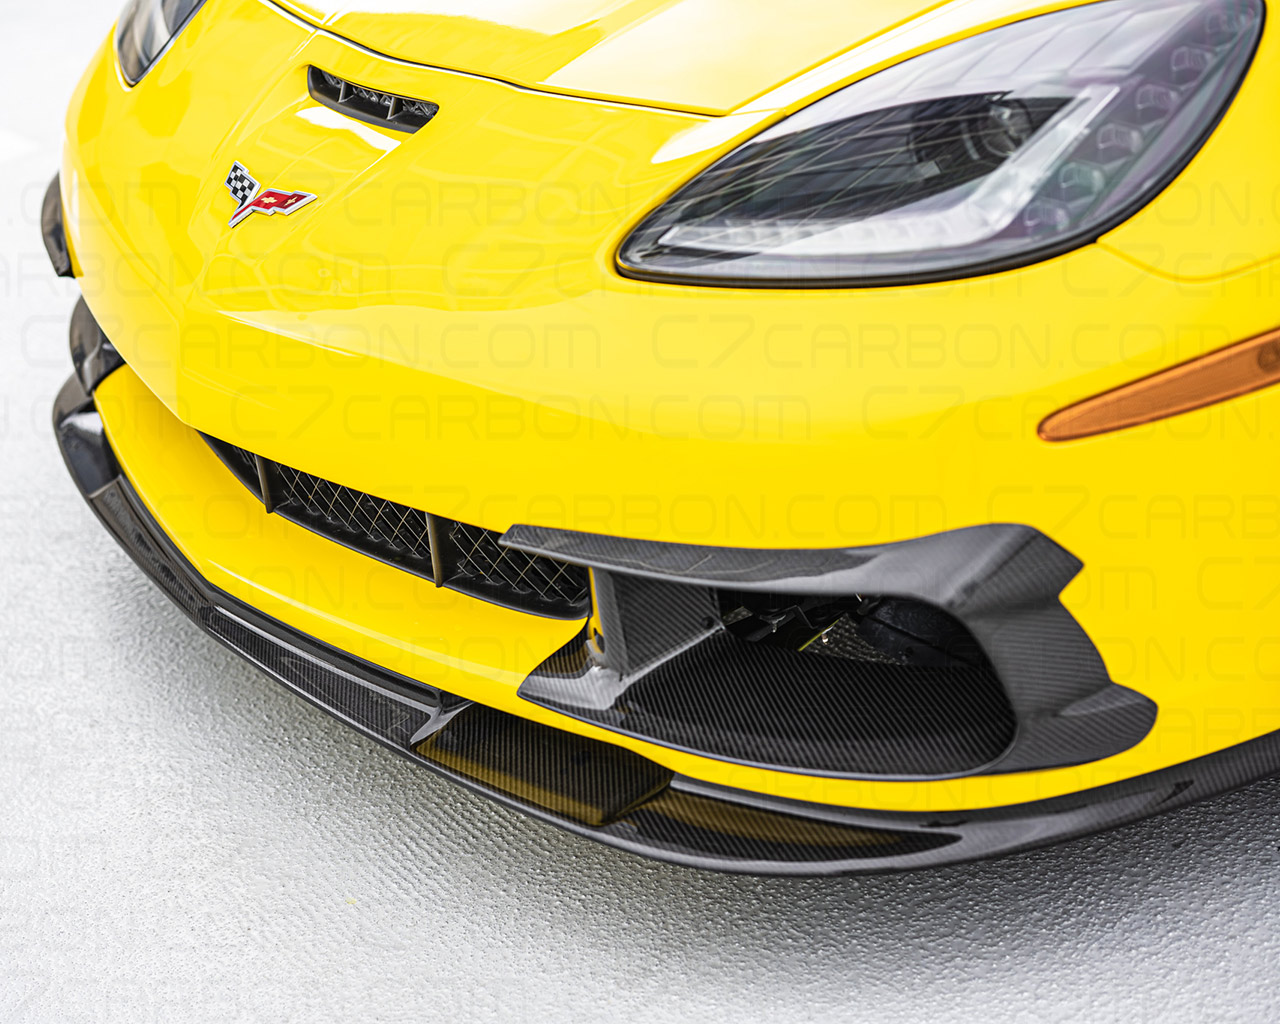 06-13 Z06/ZR1/GS C6 Corvette, C6 ZR1 Front splitter, in Carbon Fiber